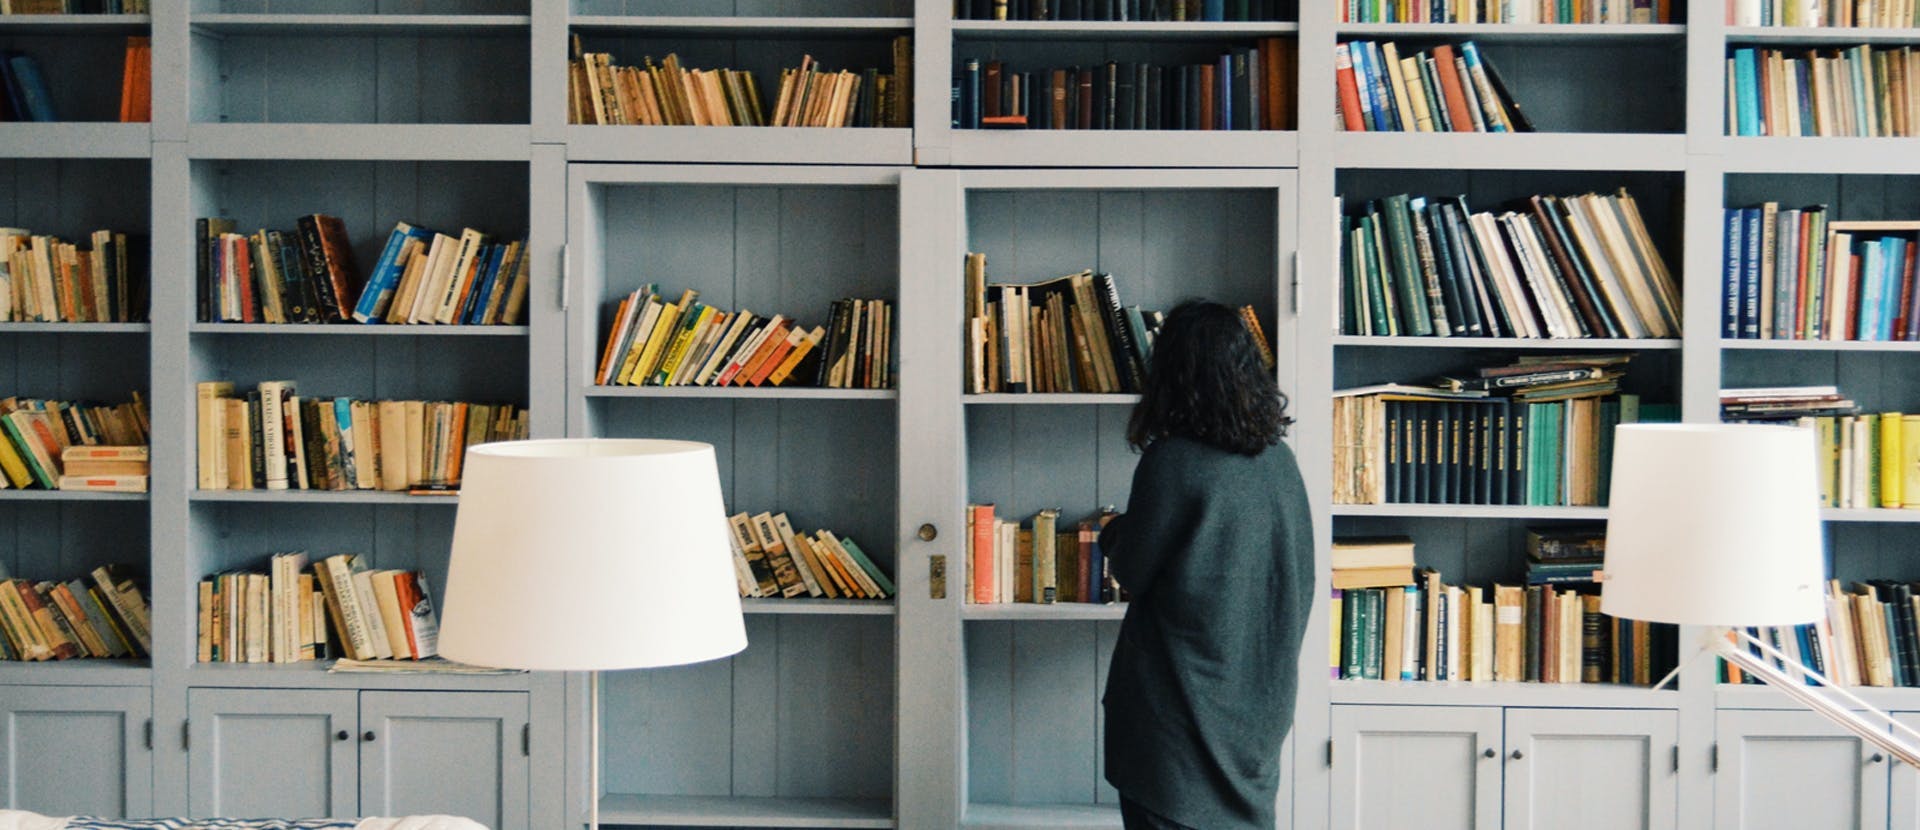 furniture bookcase human person shelf